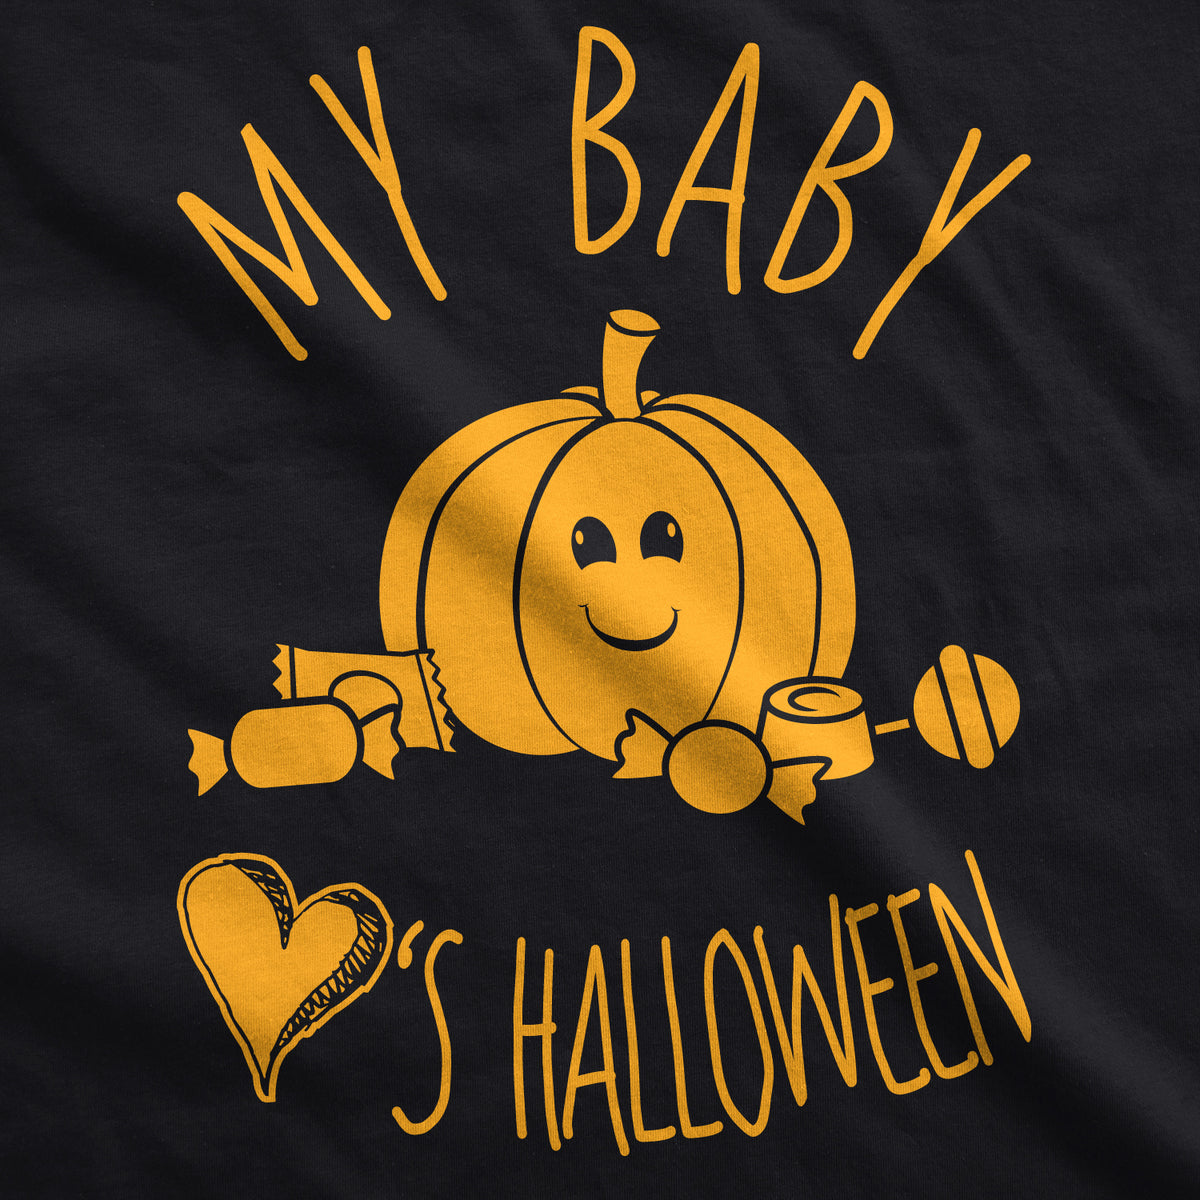 My Baby Loves Halloween Maternity T Shirt